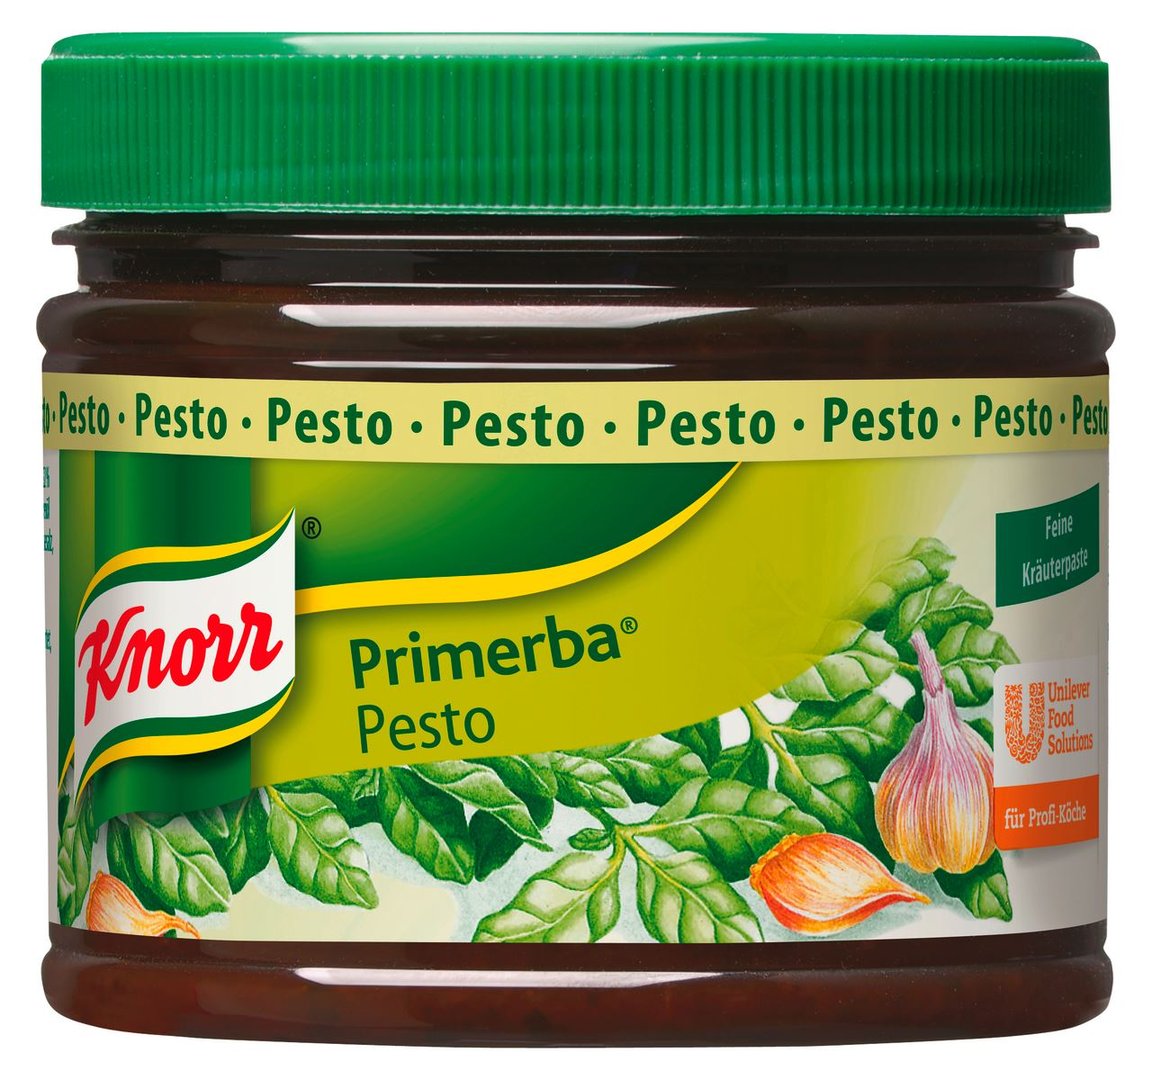 Knorr - Primerba Pesto - 340 g